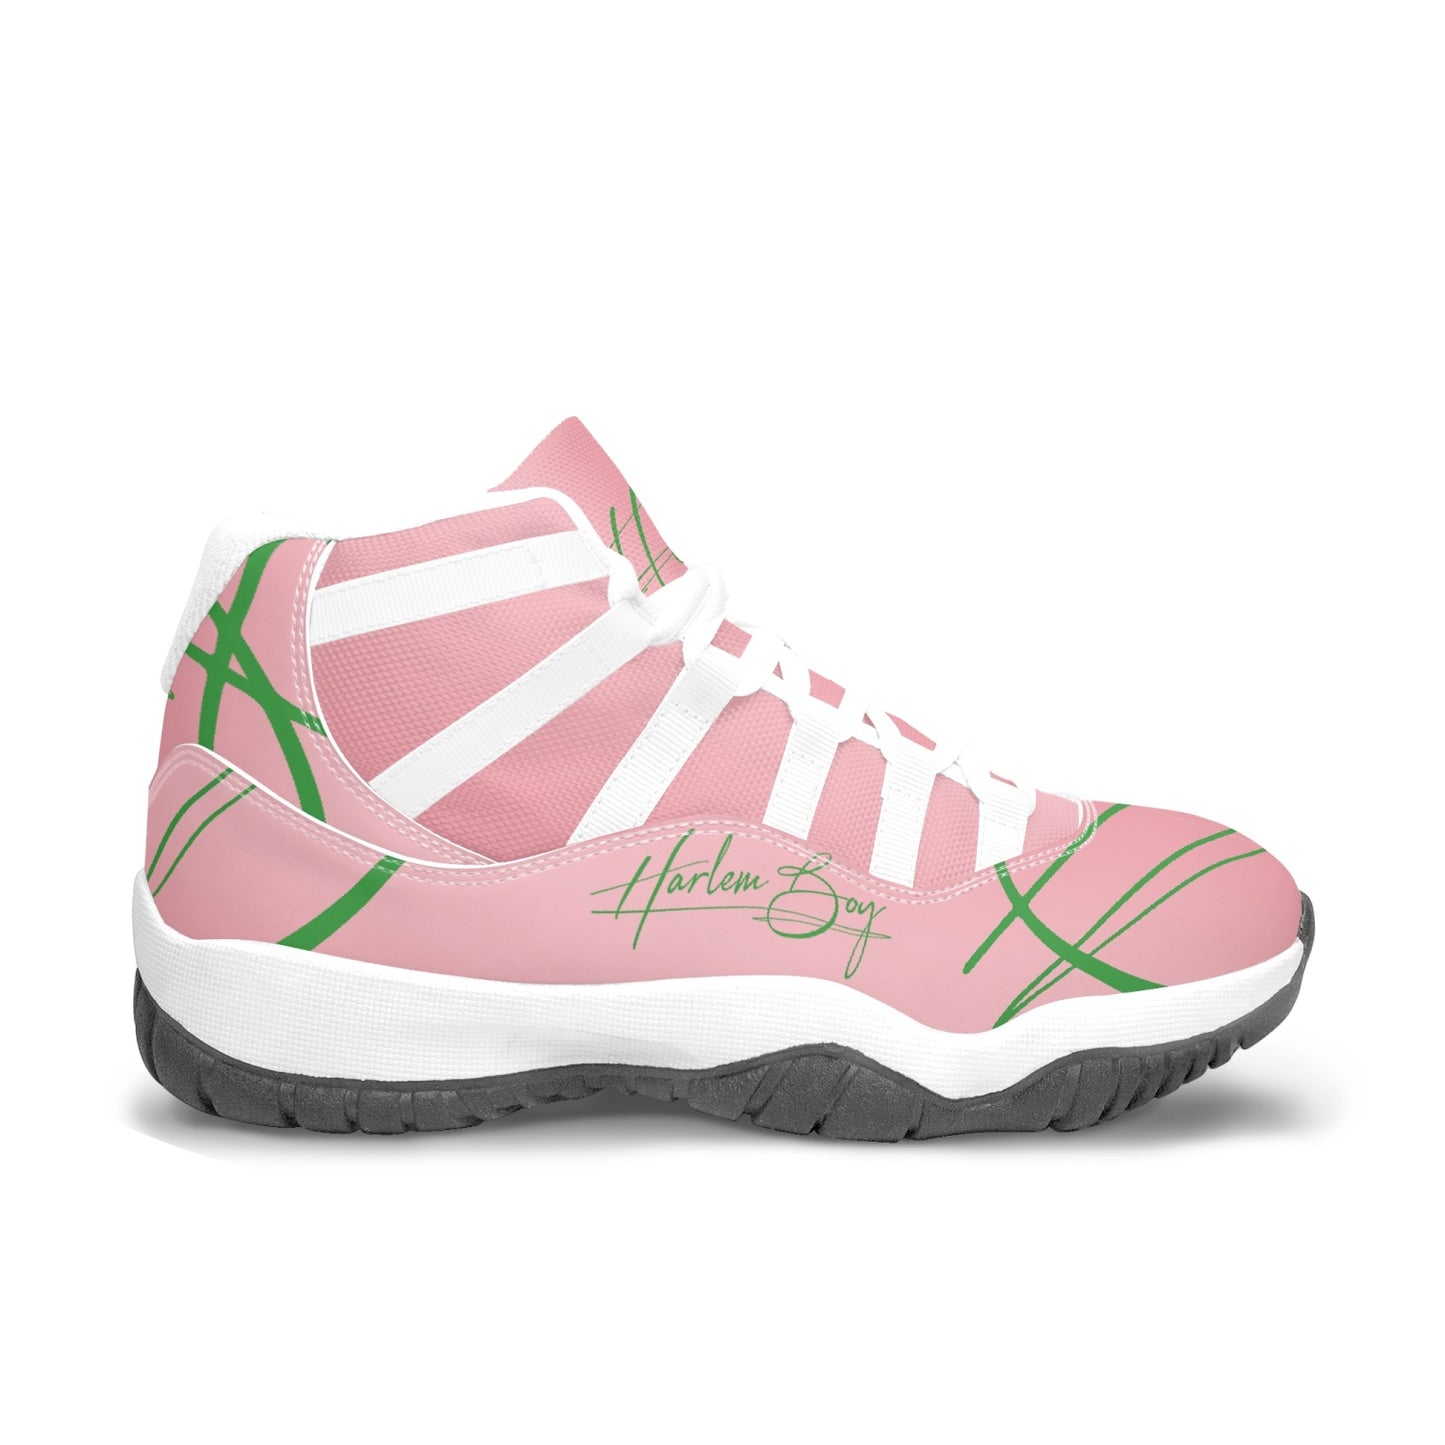 Harlem Boy "Tribe" Basketball - Pink and Green w/ White Trim (Women's)